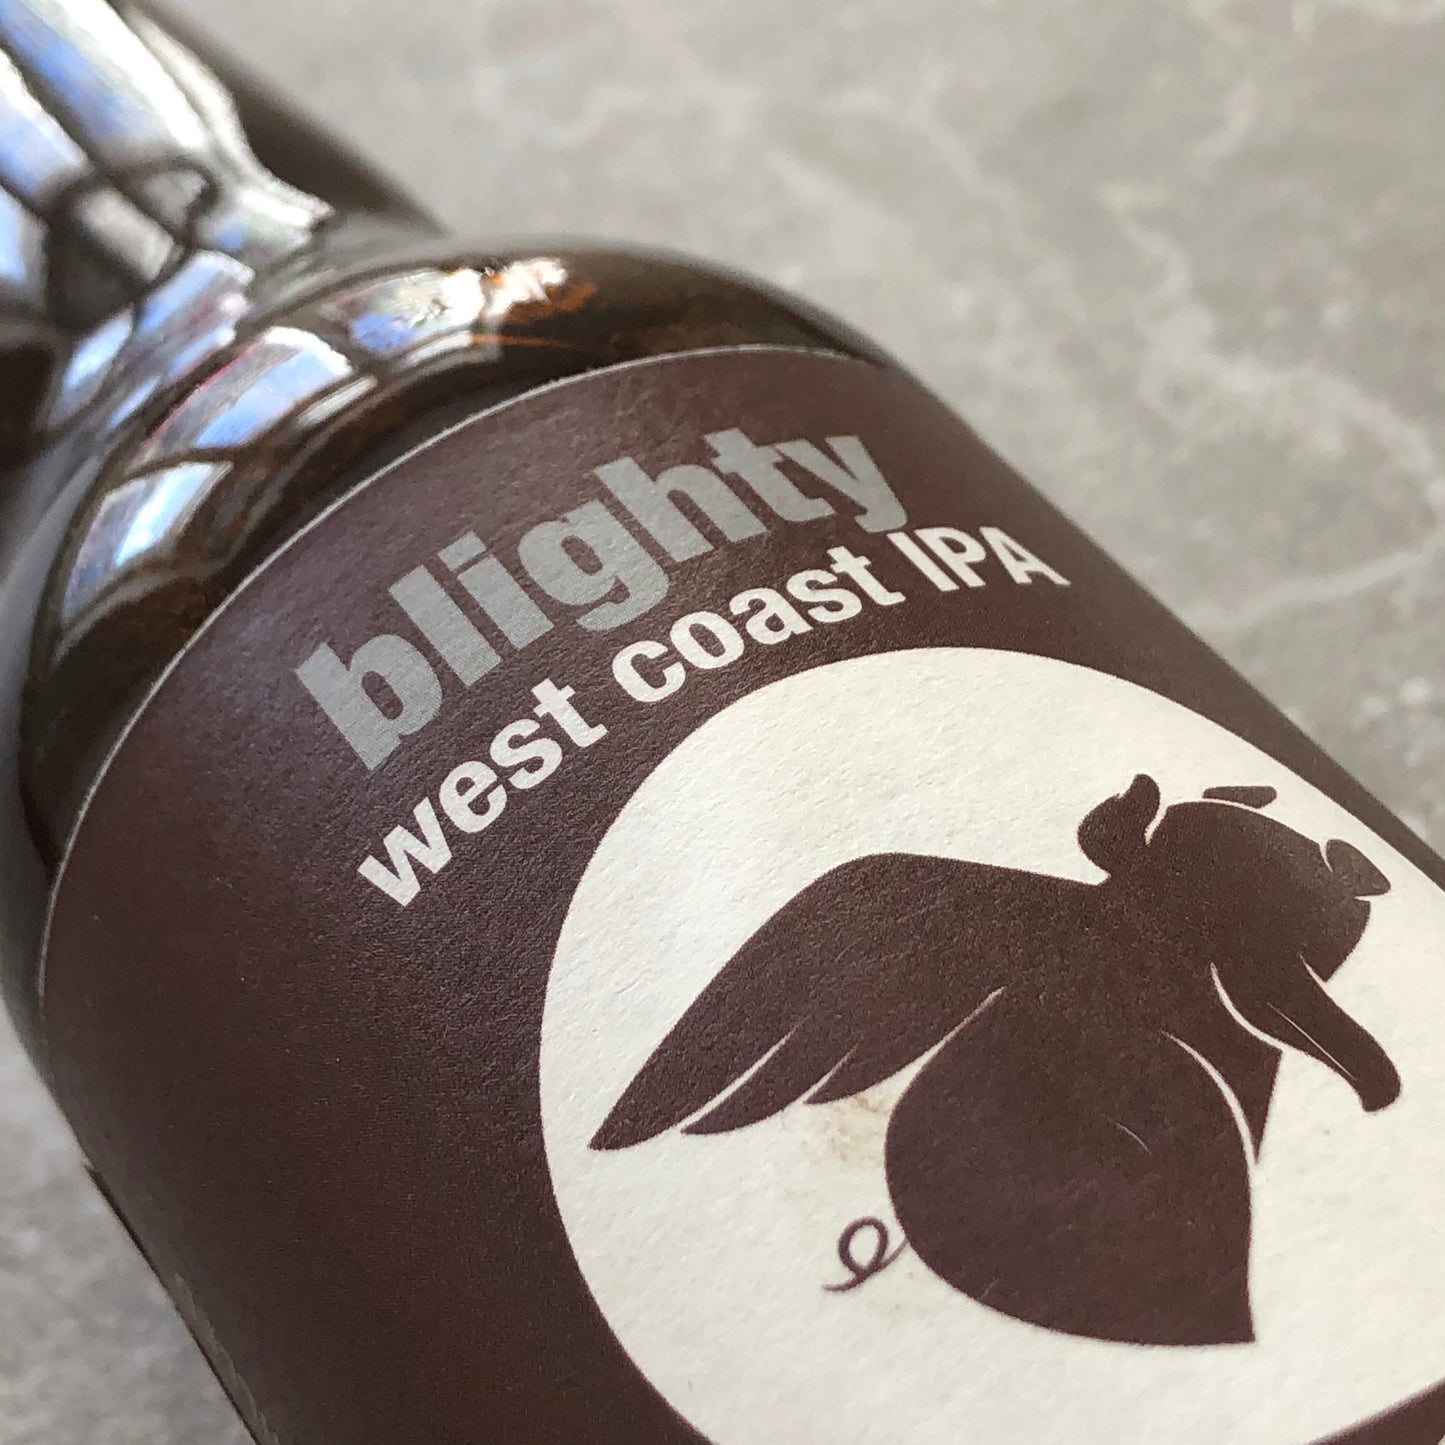 blighty 0% west-coast IPA alcohol free beer